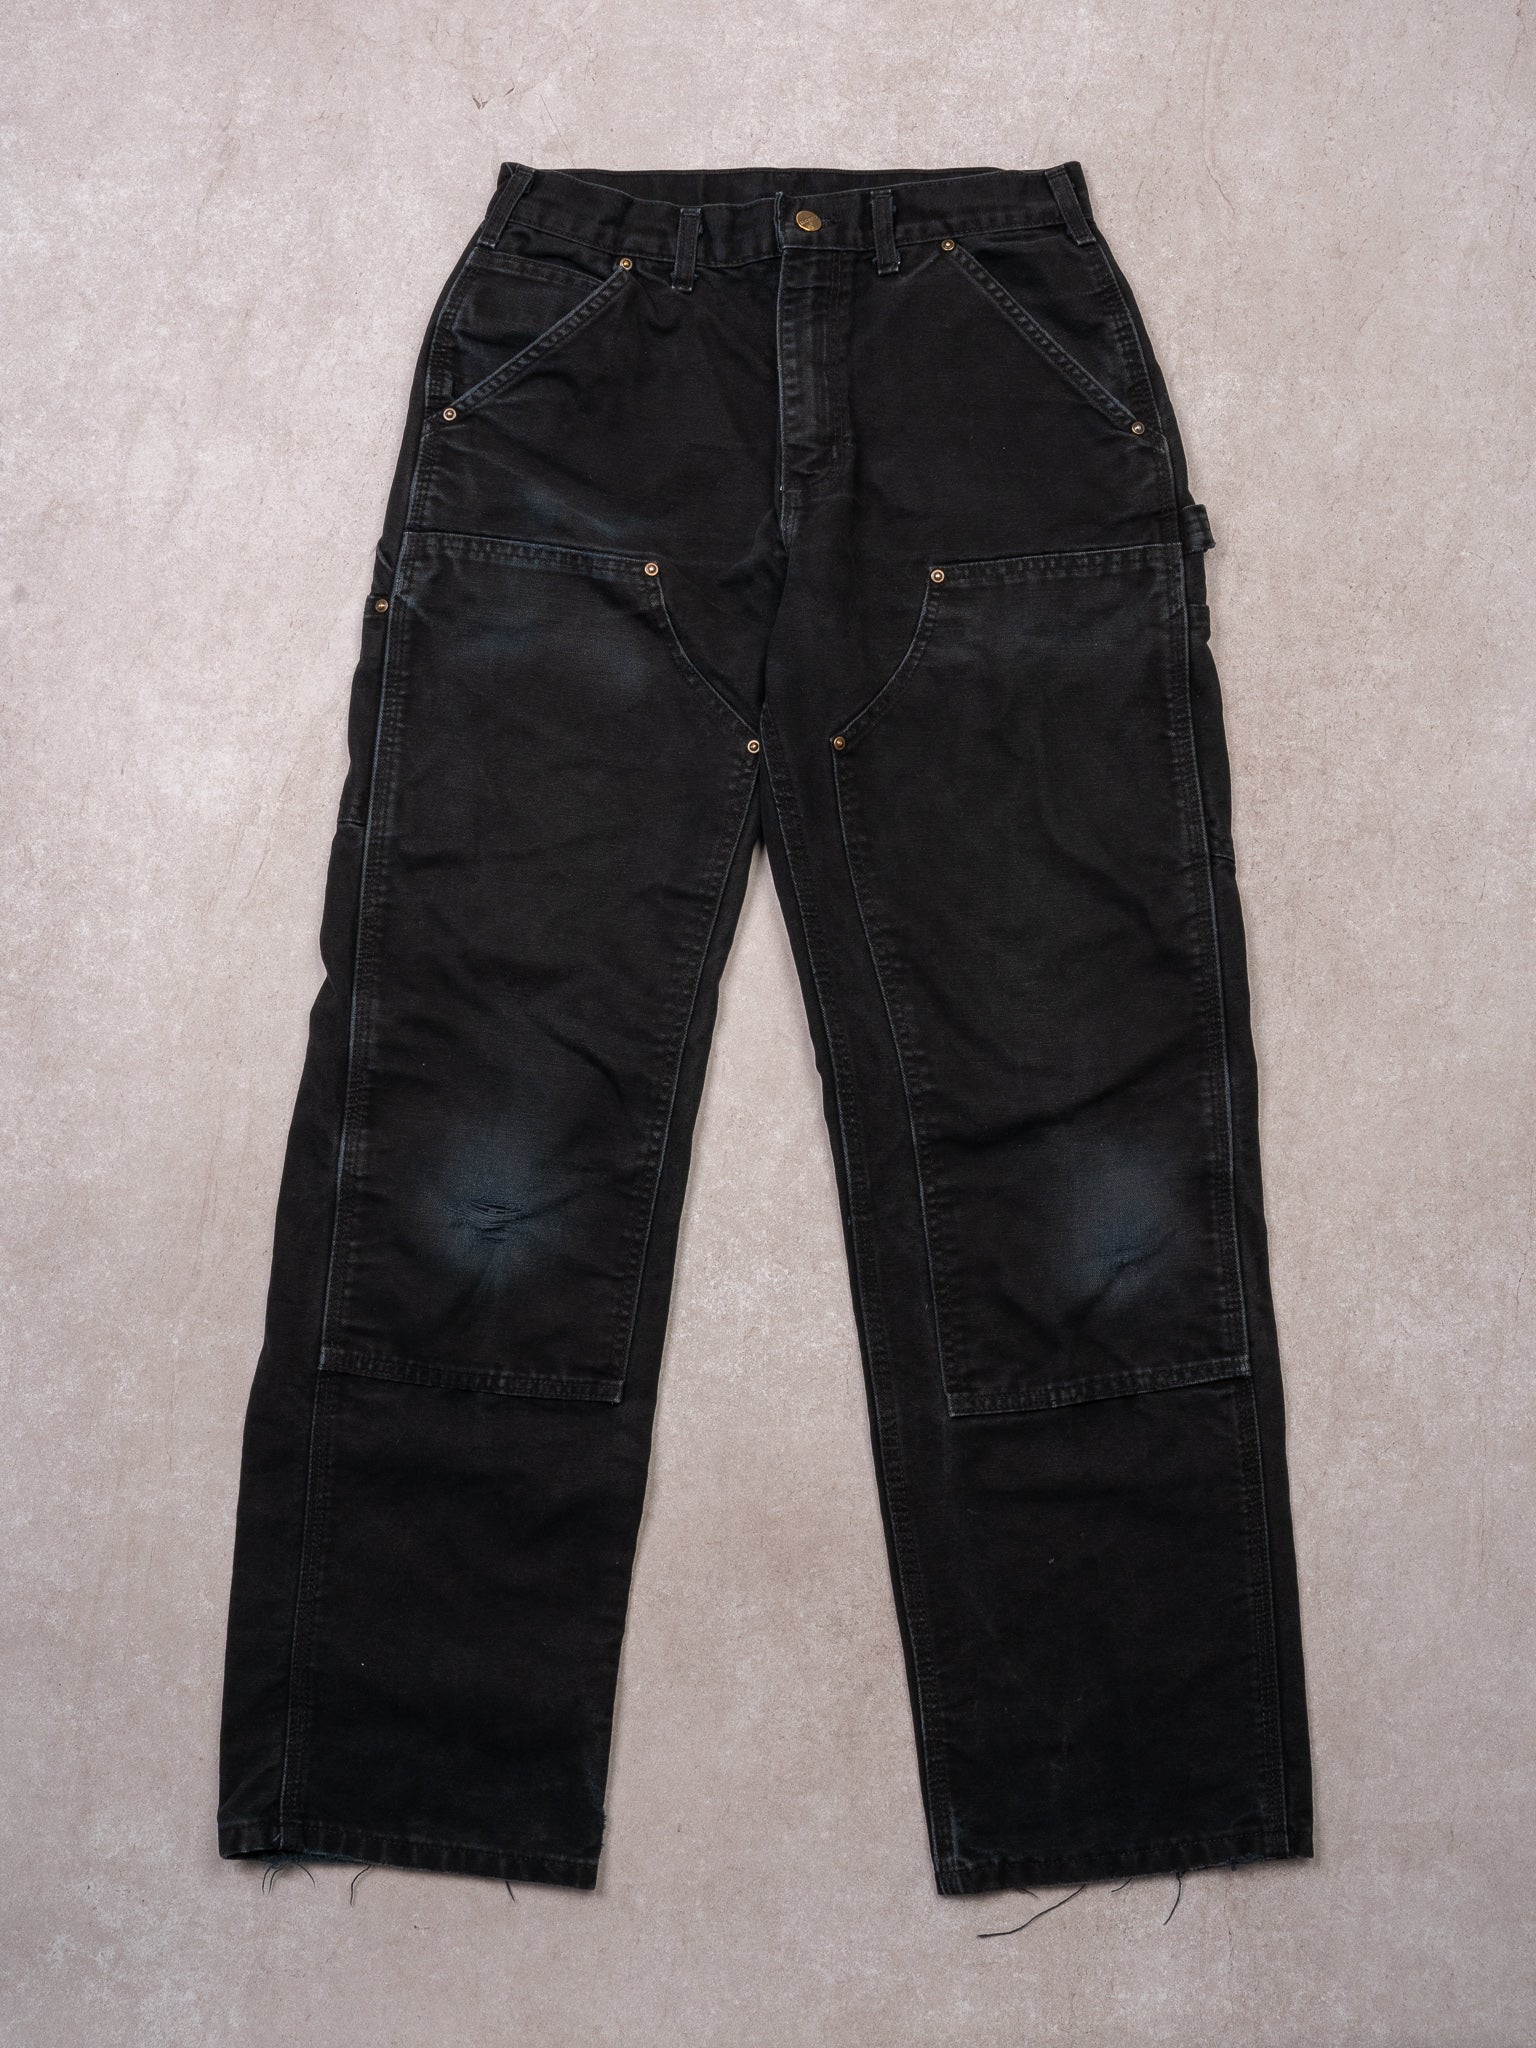 VIntage Black Carhartt Double Knee Dungaree Cargo Pants (30 x 31)